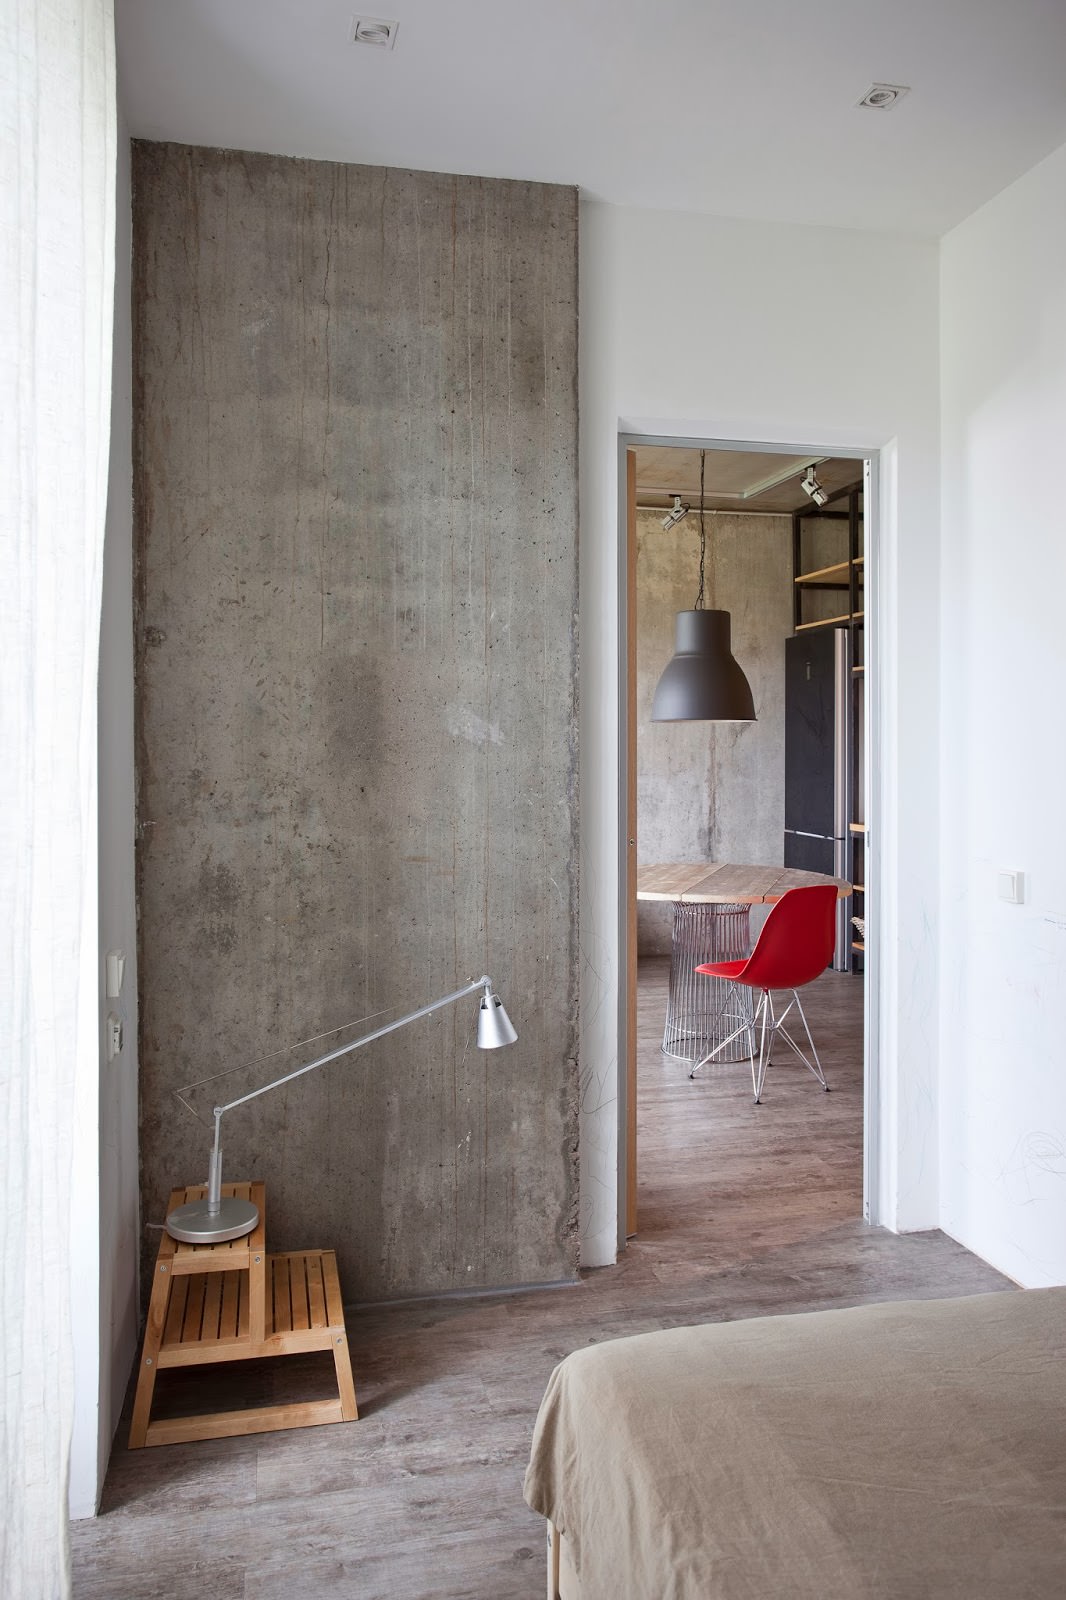 Concrete in the interior of a creative apartment